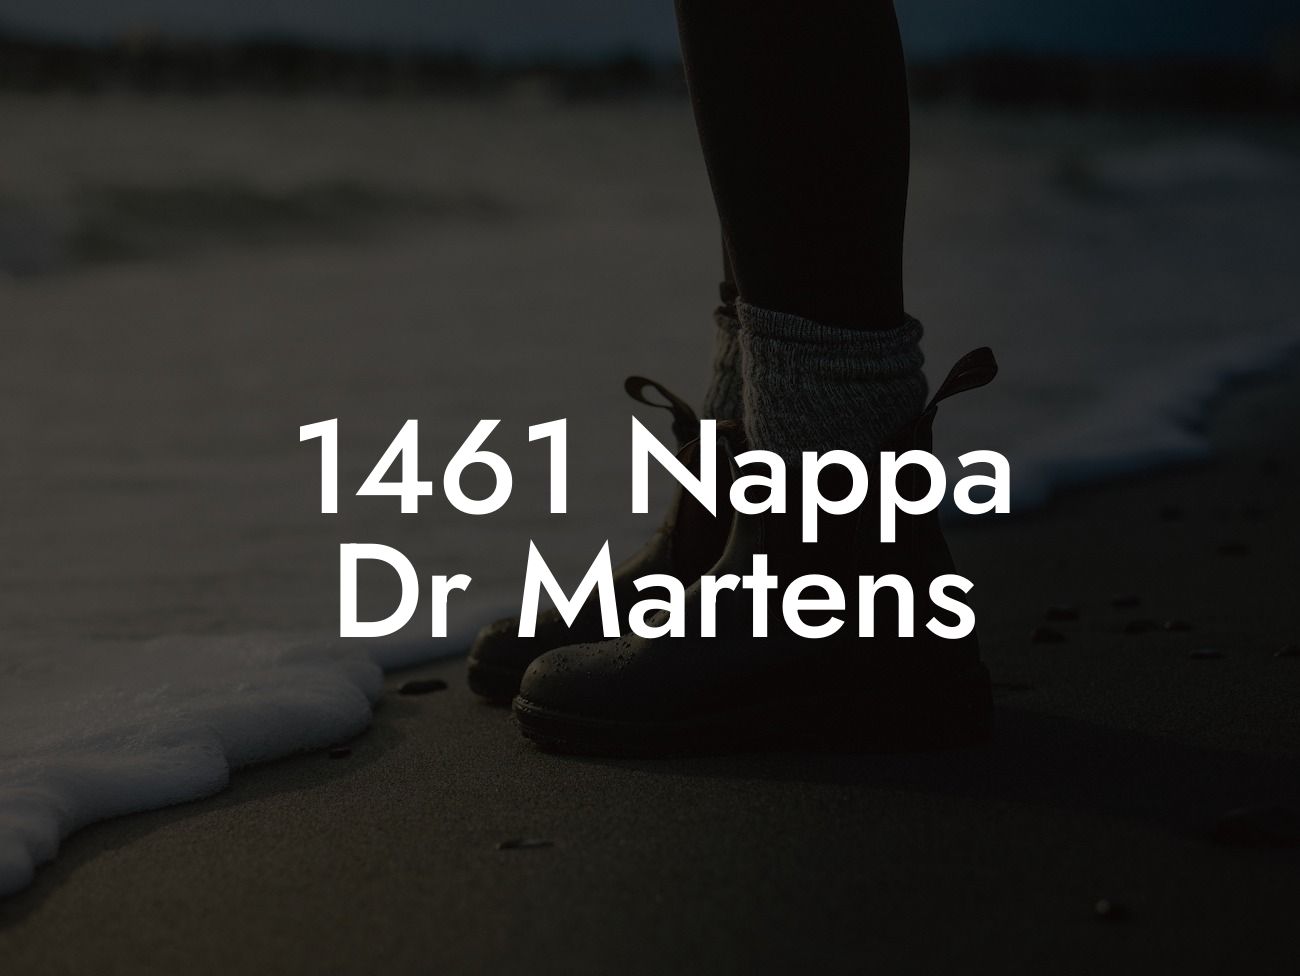 1461 Nappa Dr Martens